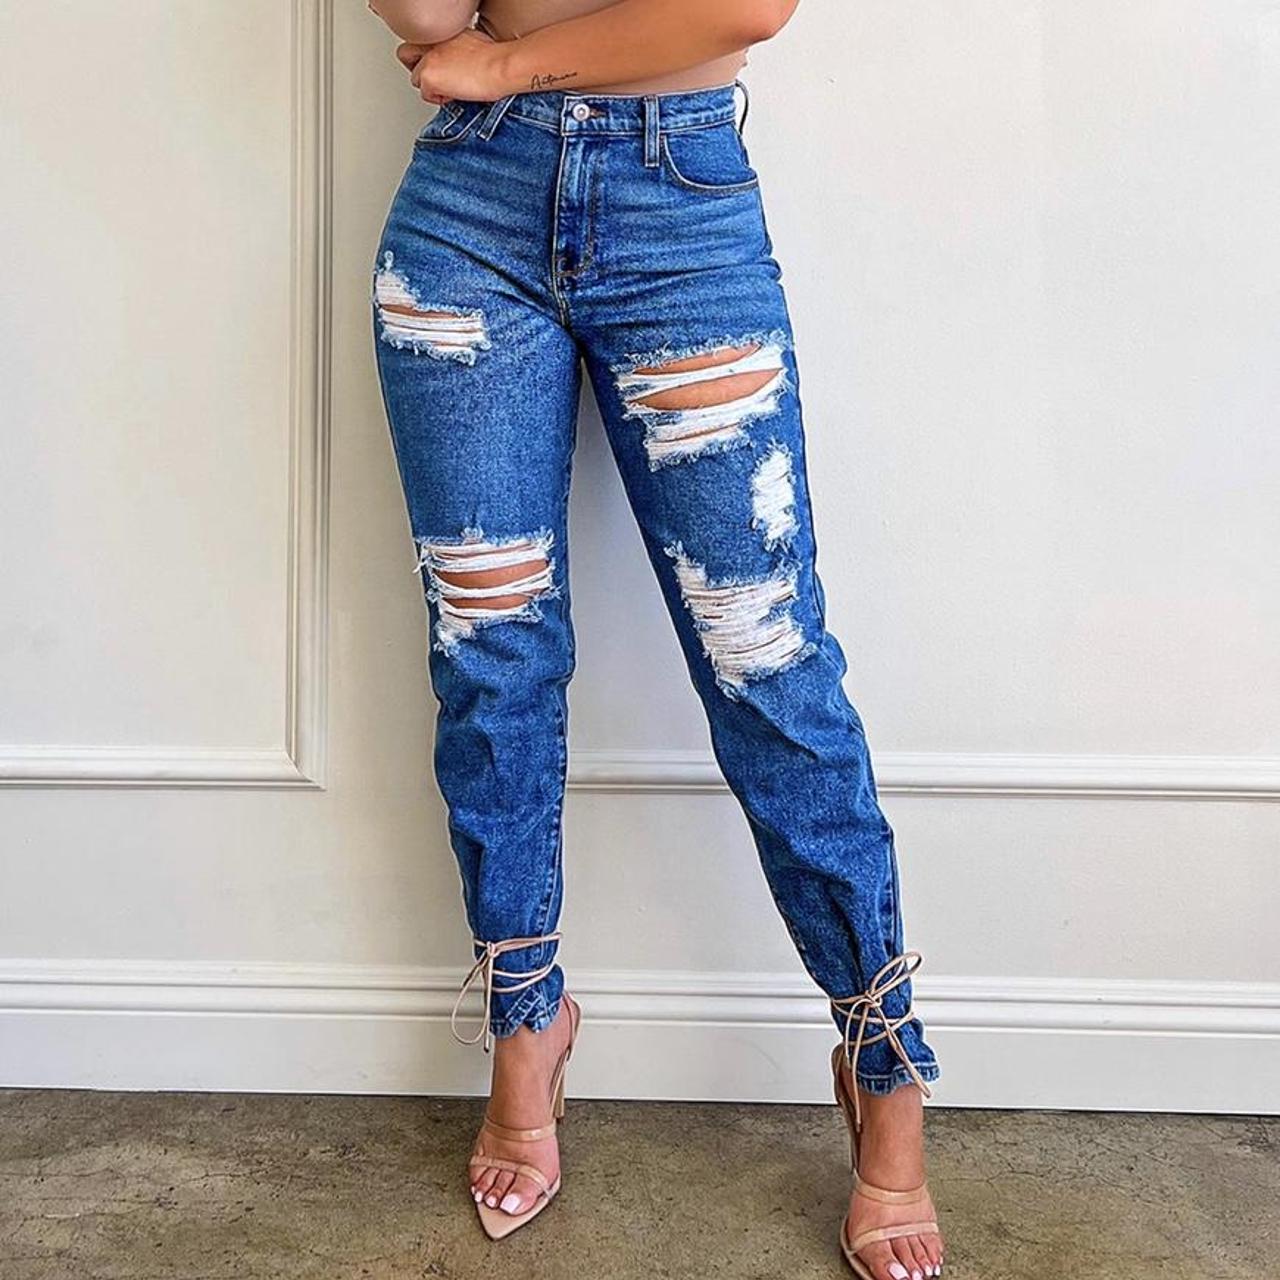 Stuiteren rooster Voorbijganger Fashion Nova Women's Blue Jeans | Depop